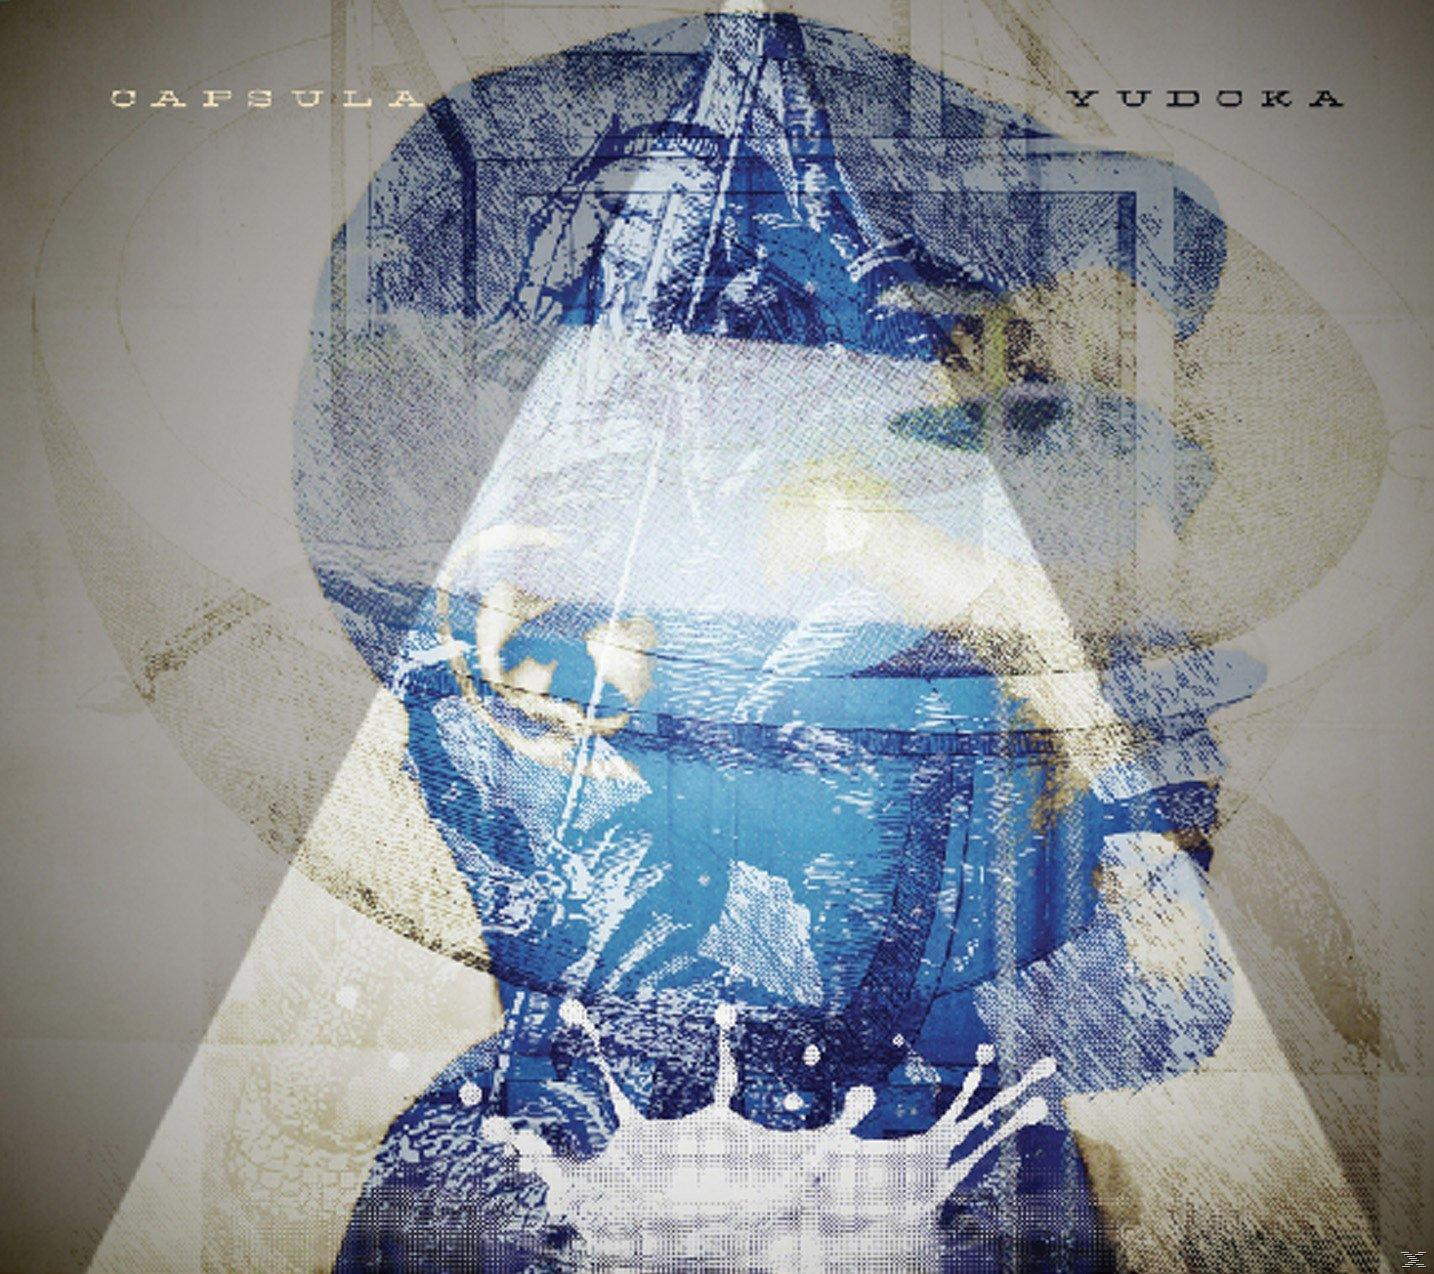 Capsula - - (Vinyl) Yudoka